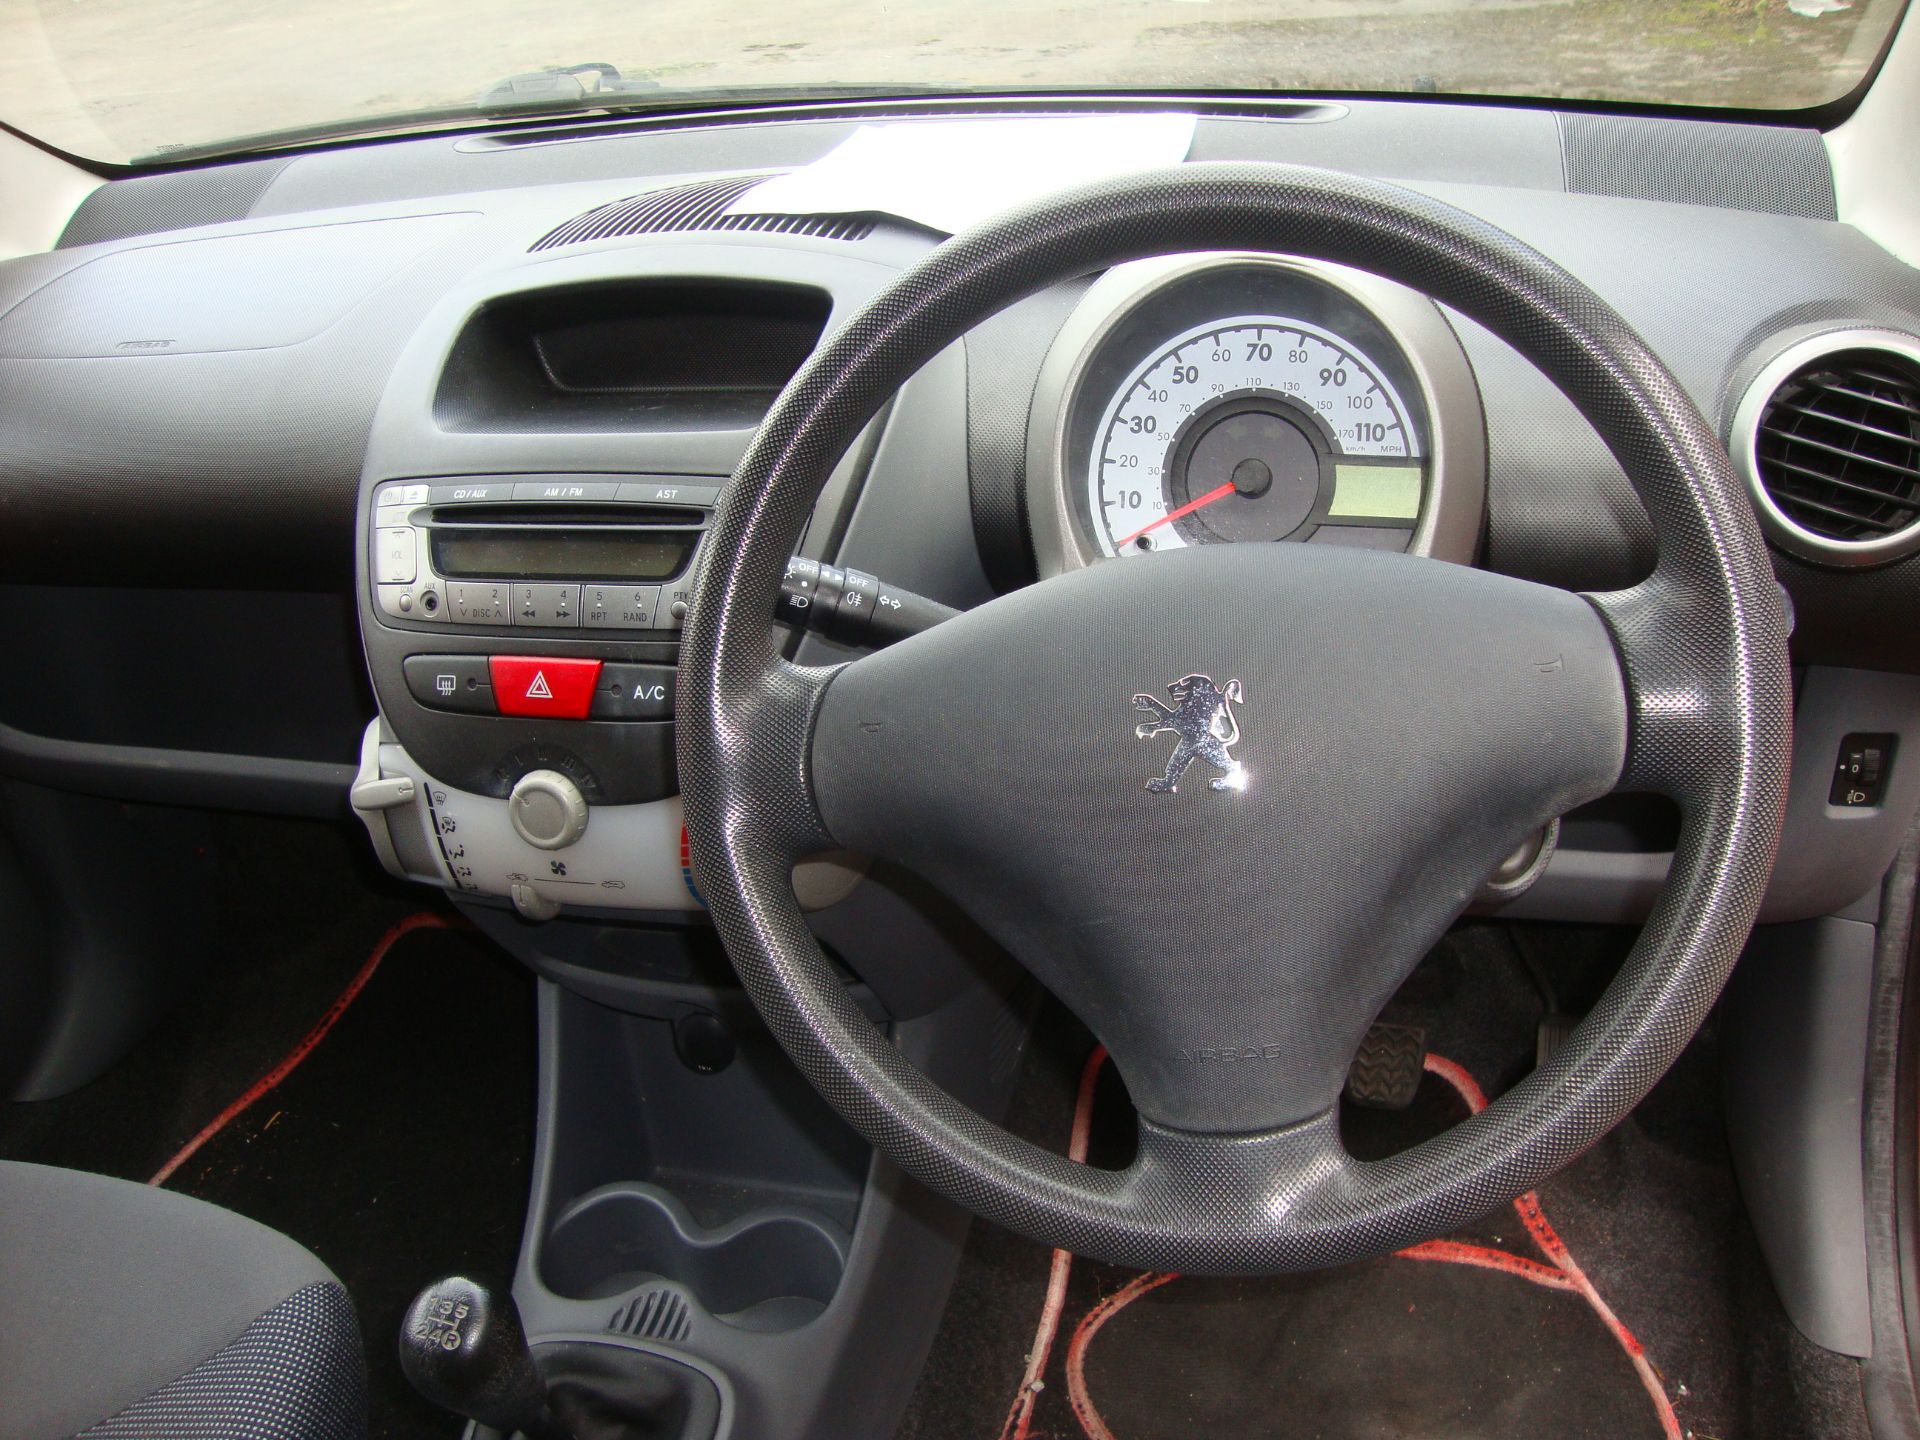 2005 Peugeot 107 Urban 3 door hatchback - one owner, just 36,000 recorded miles - Image 8 of 13